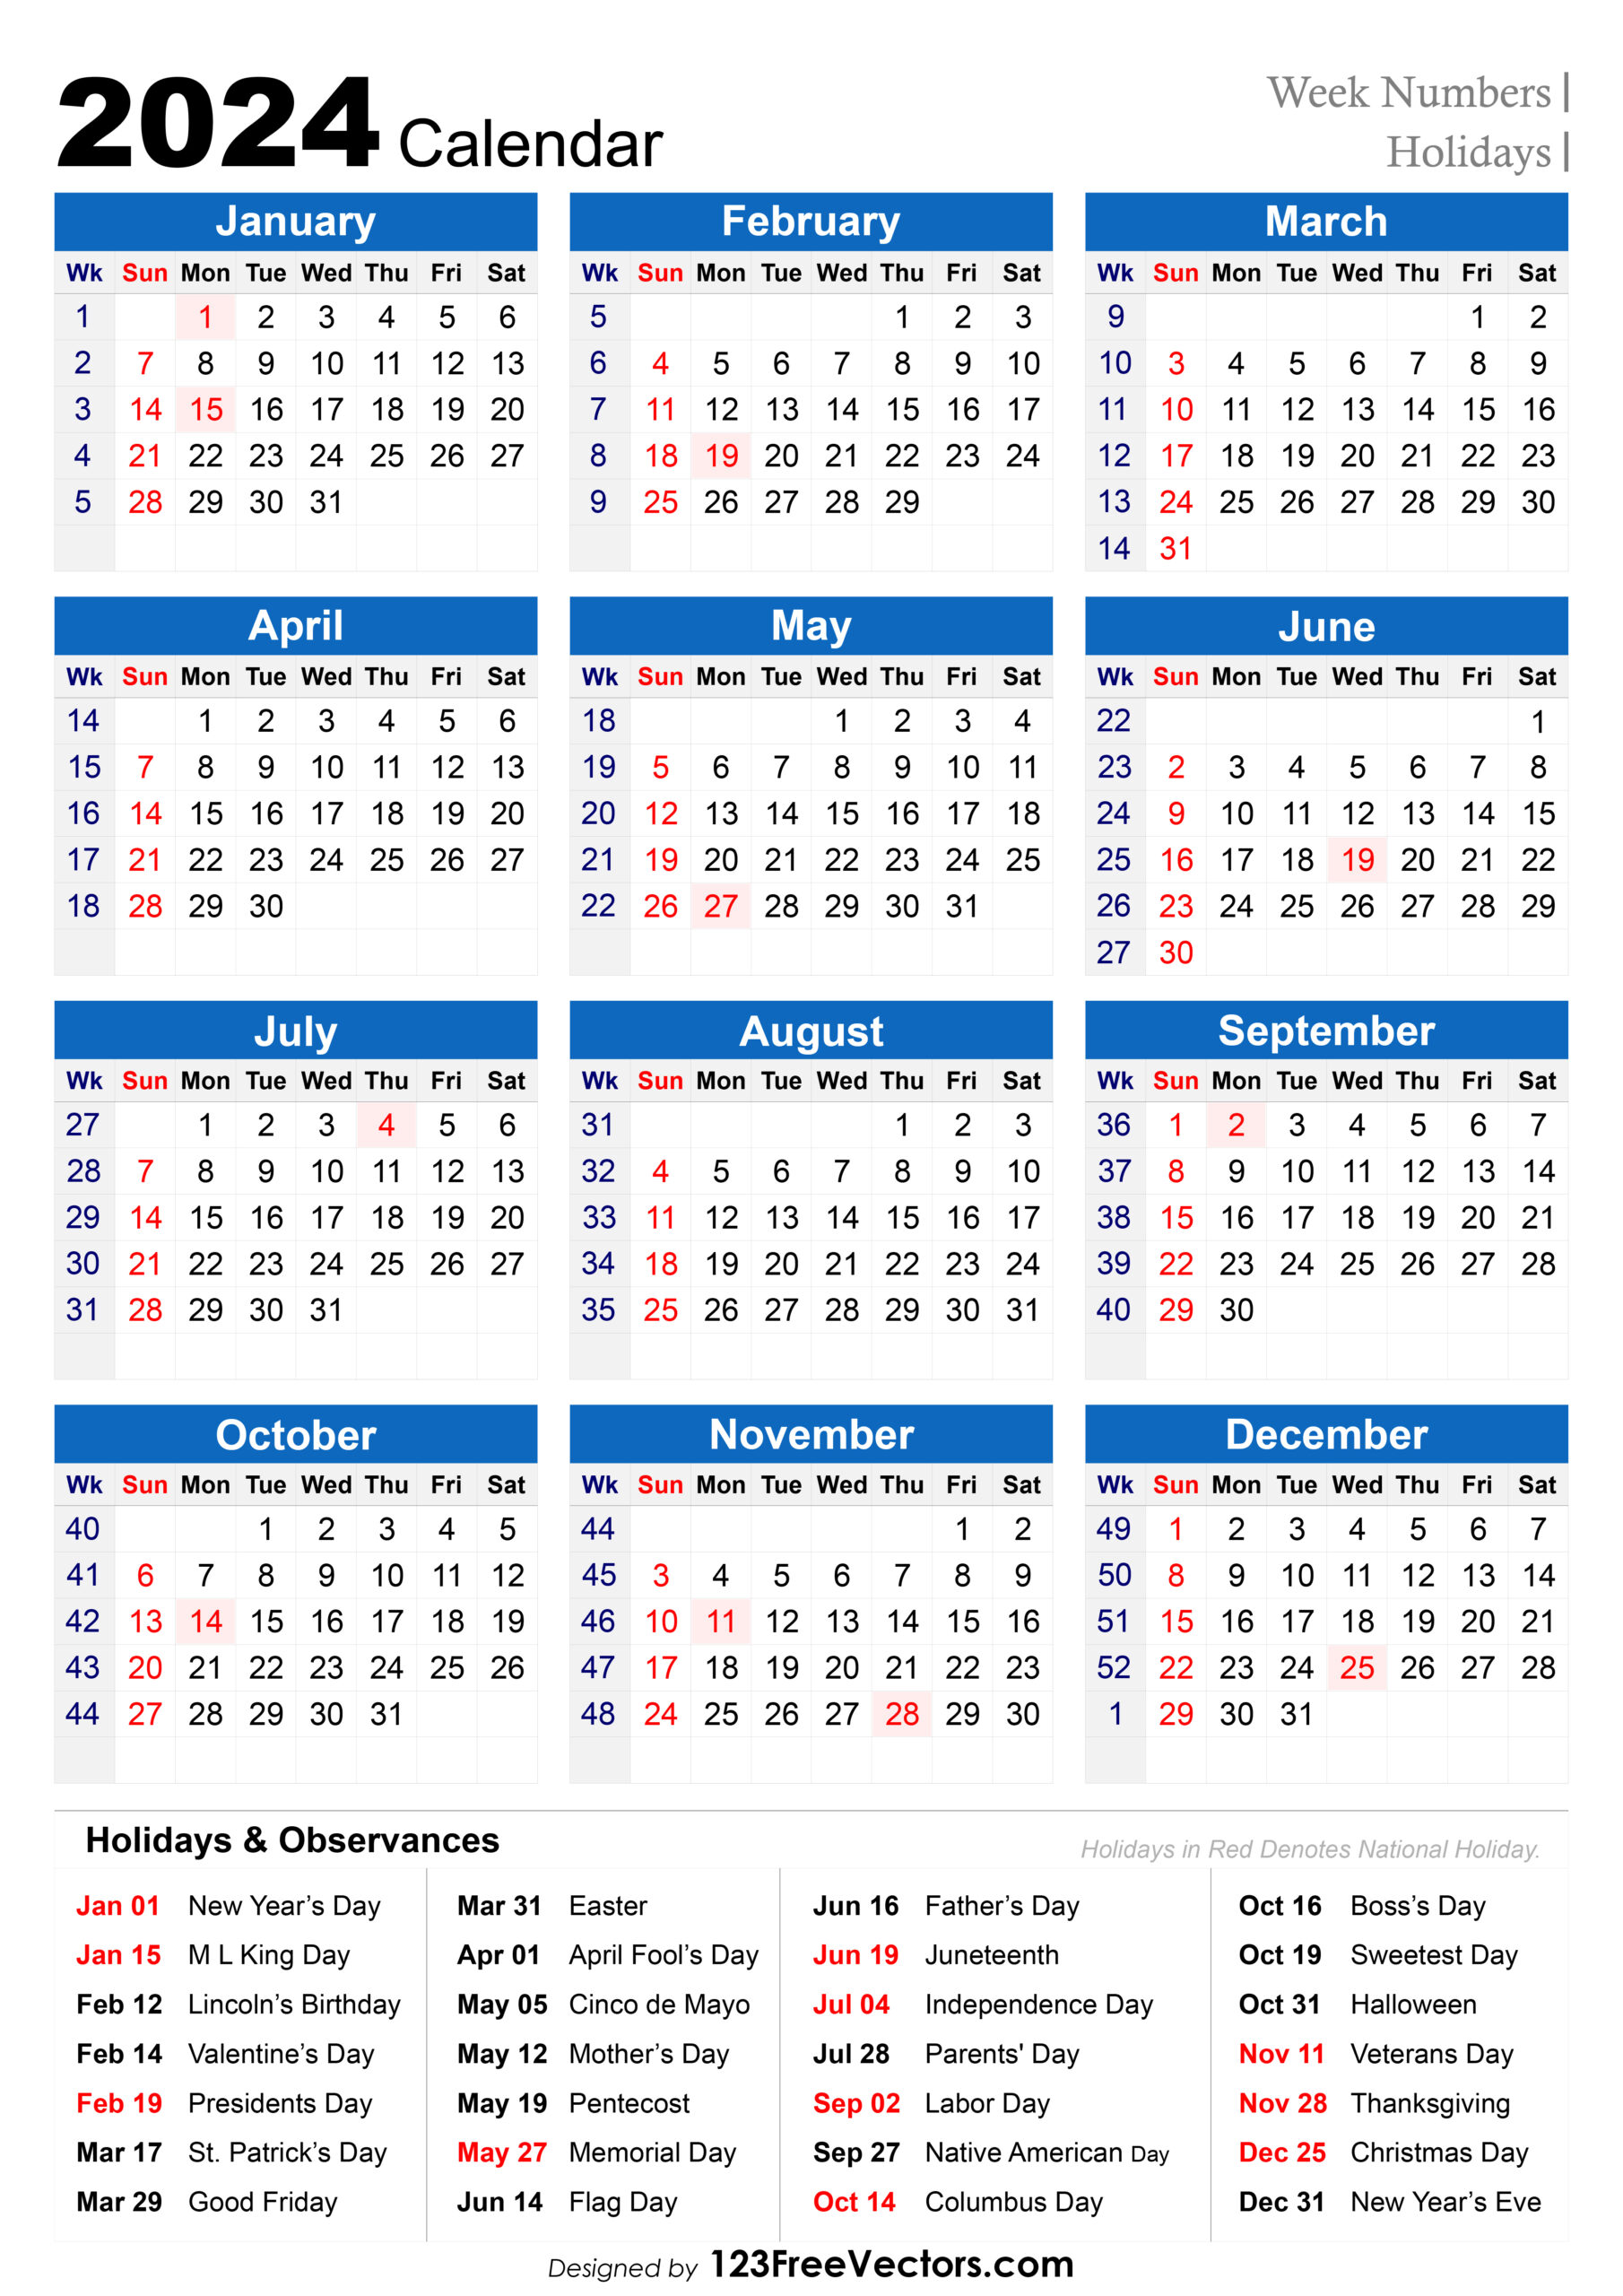 Free 2024 Holiday Calendar With Week Numbers |  Calendar 2024